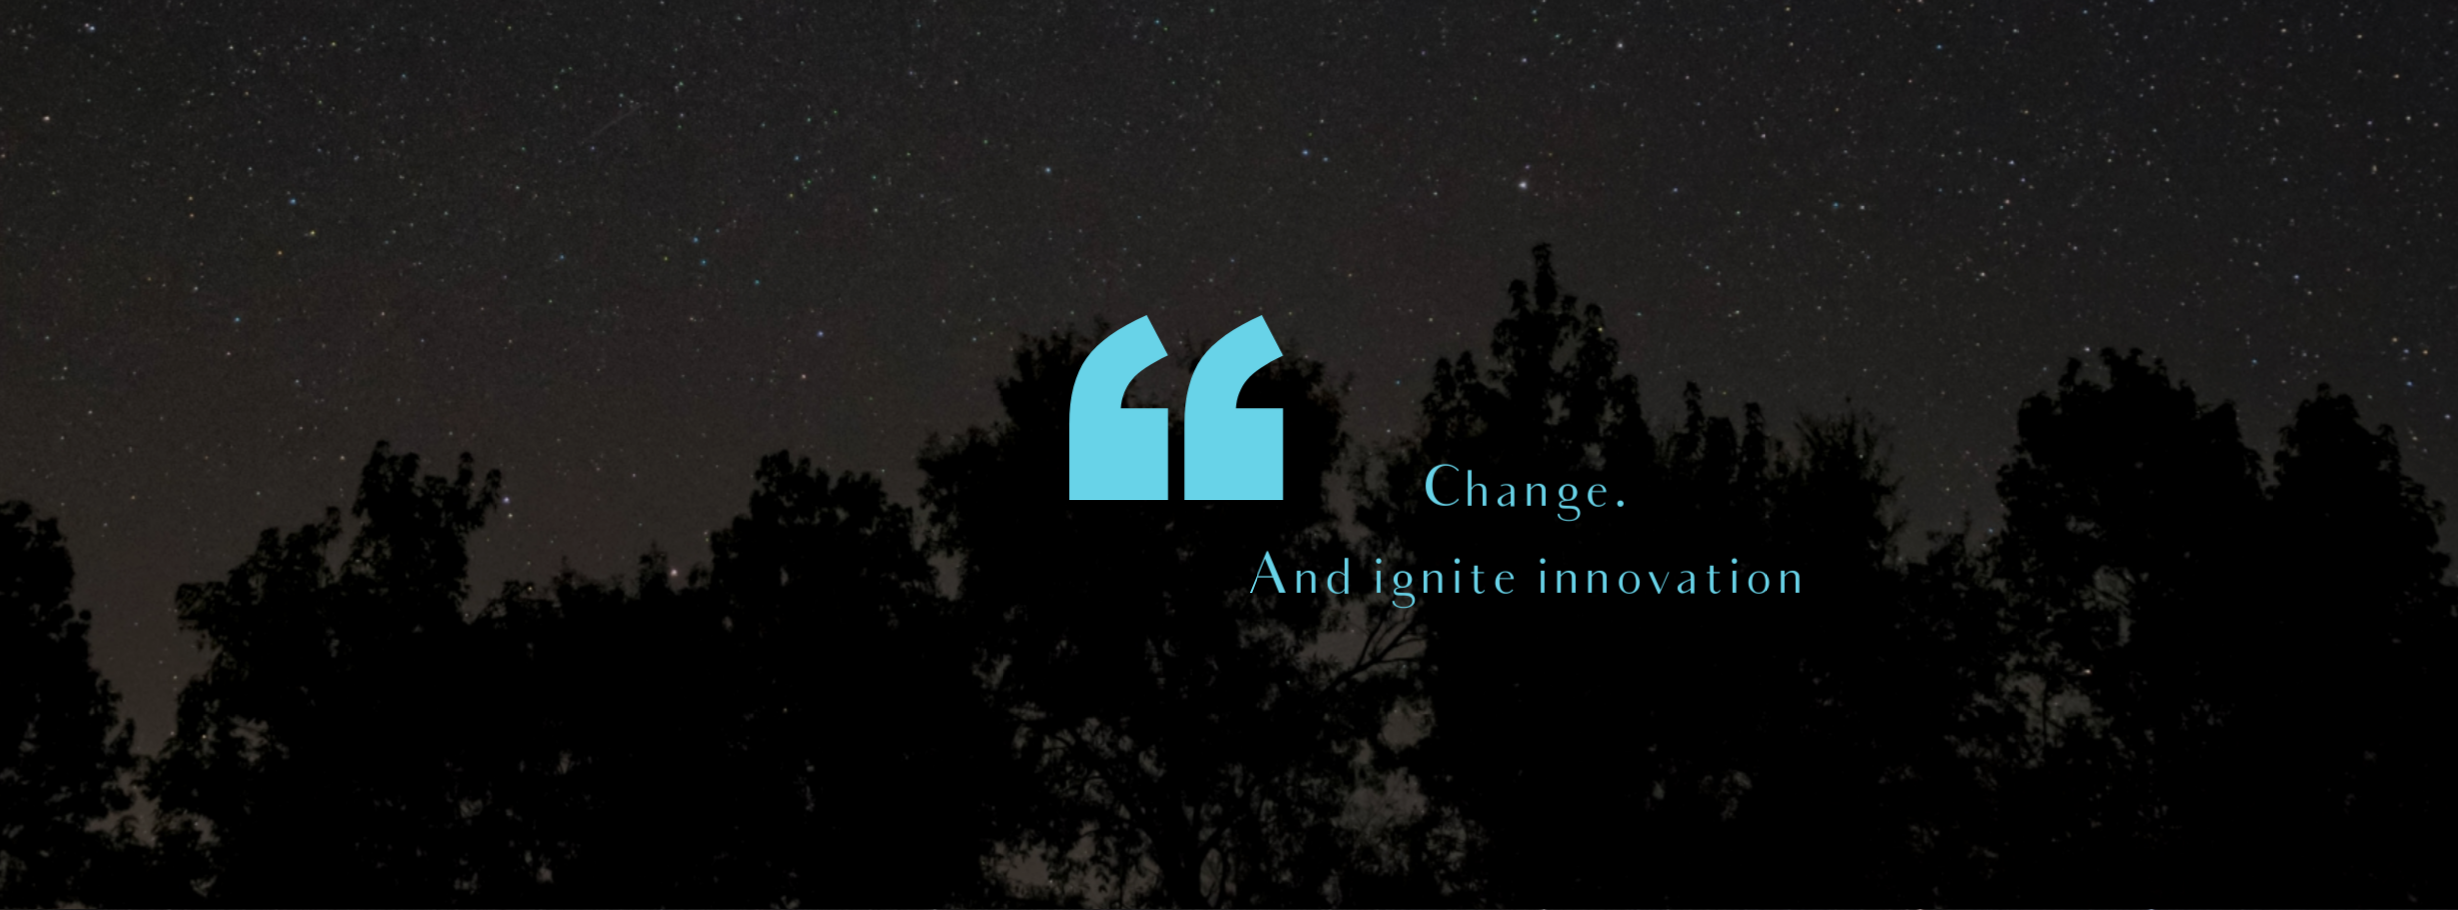 Change and ignite innovation